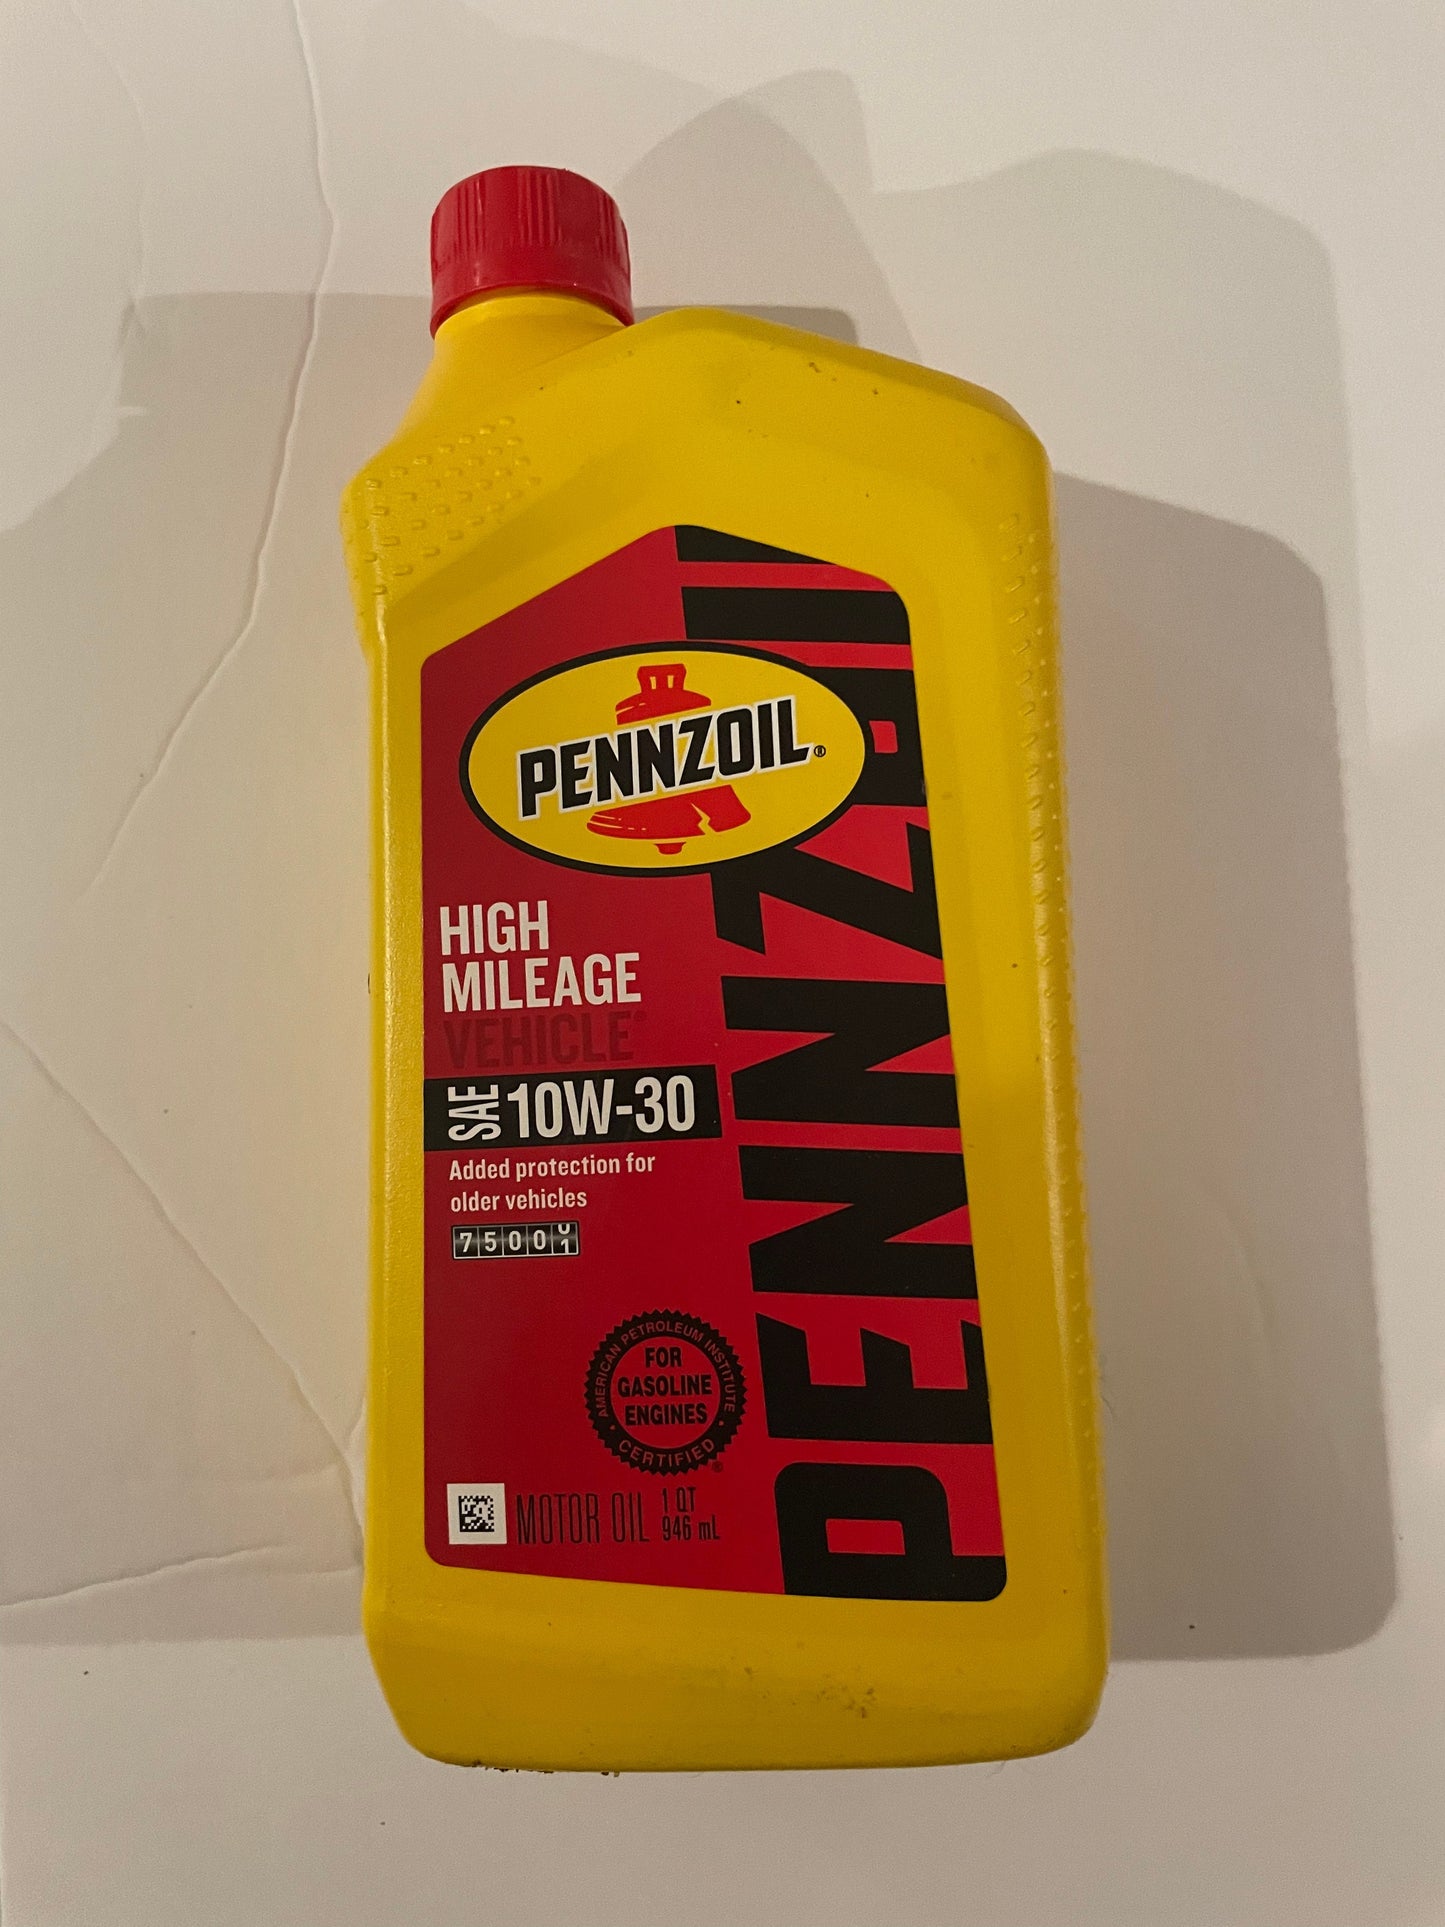 Pennzoil High Mileage Motor Oil